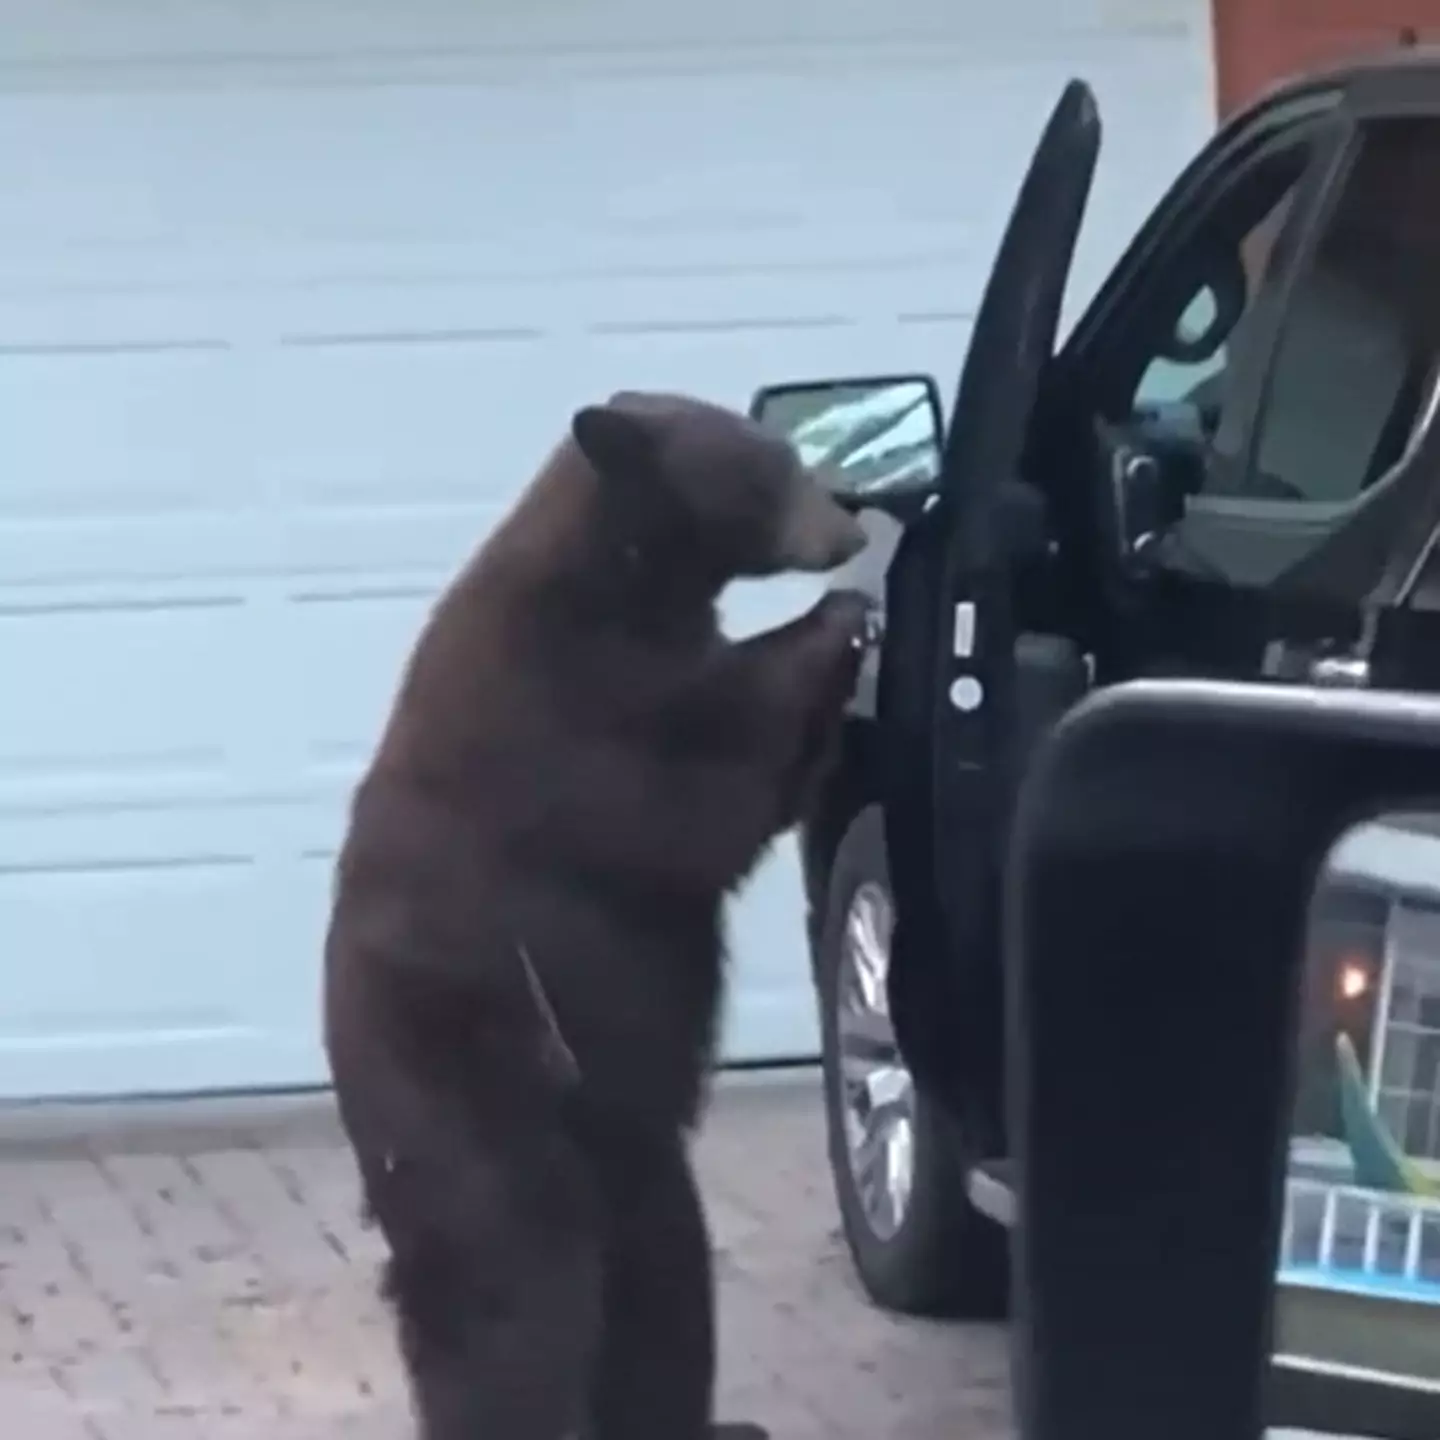 The bear got into the unlocked car.